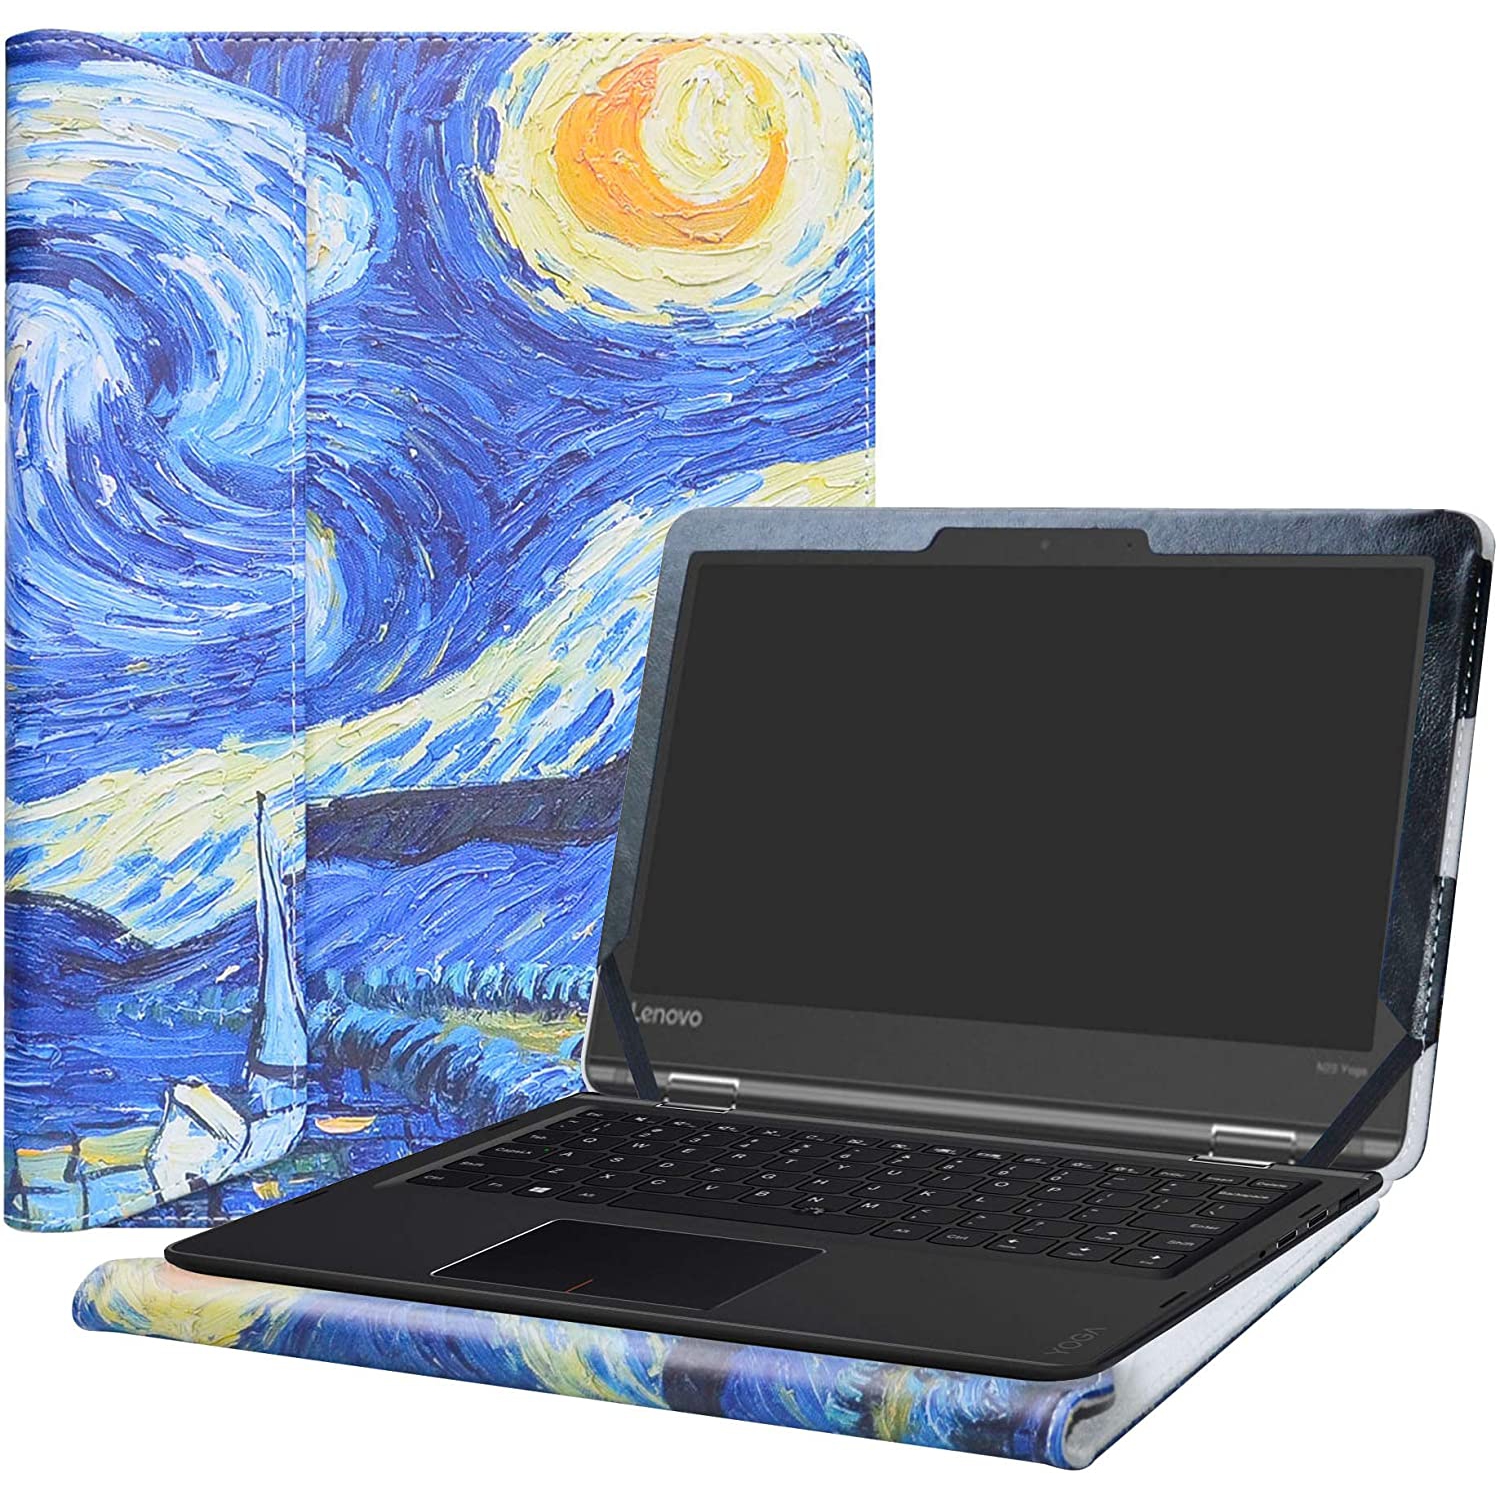 Protective Case Cover for 11.6" Lenovo Flex 11 CHROMEBOOK/Lenovo N23 Yoga Chromebook/Lenovo ThinkPad 11e Yoga